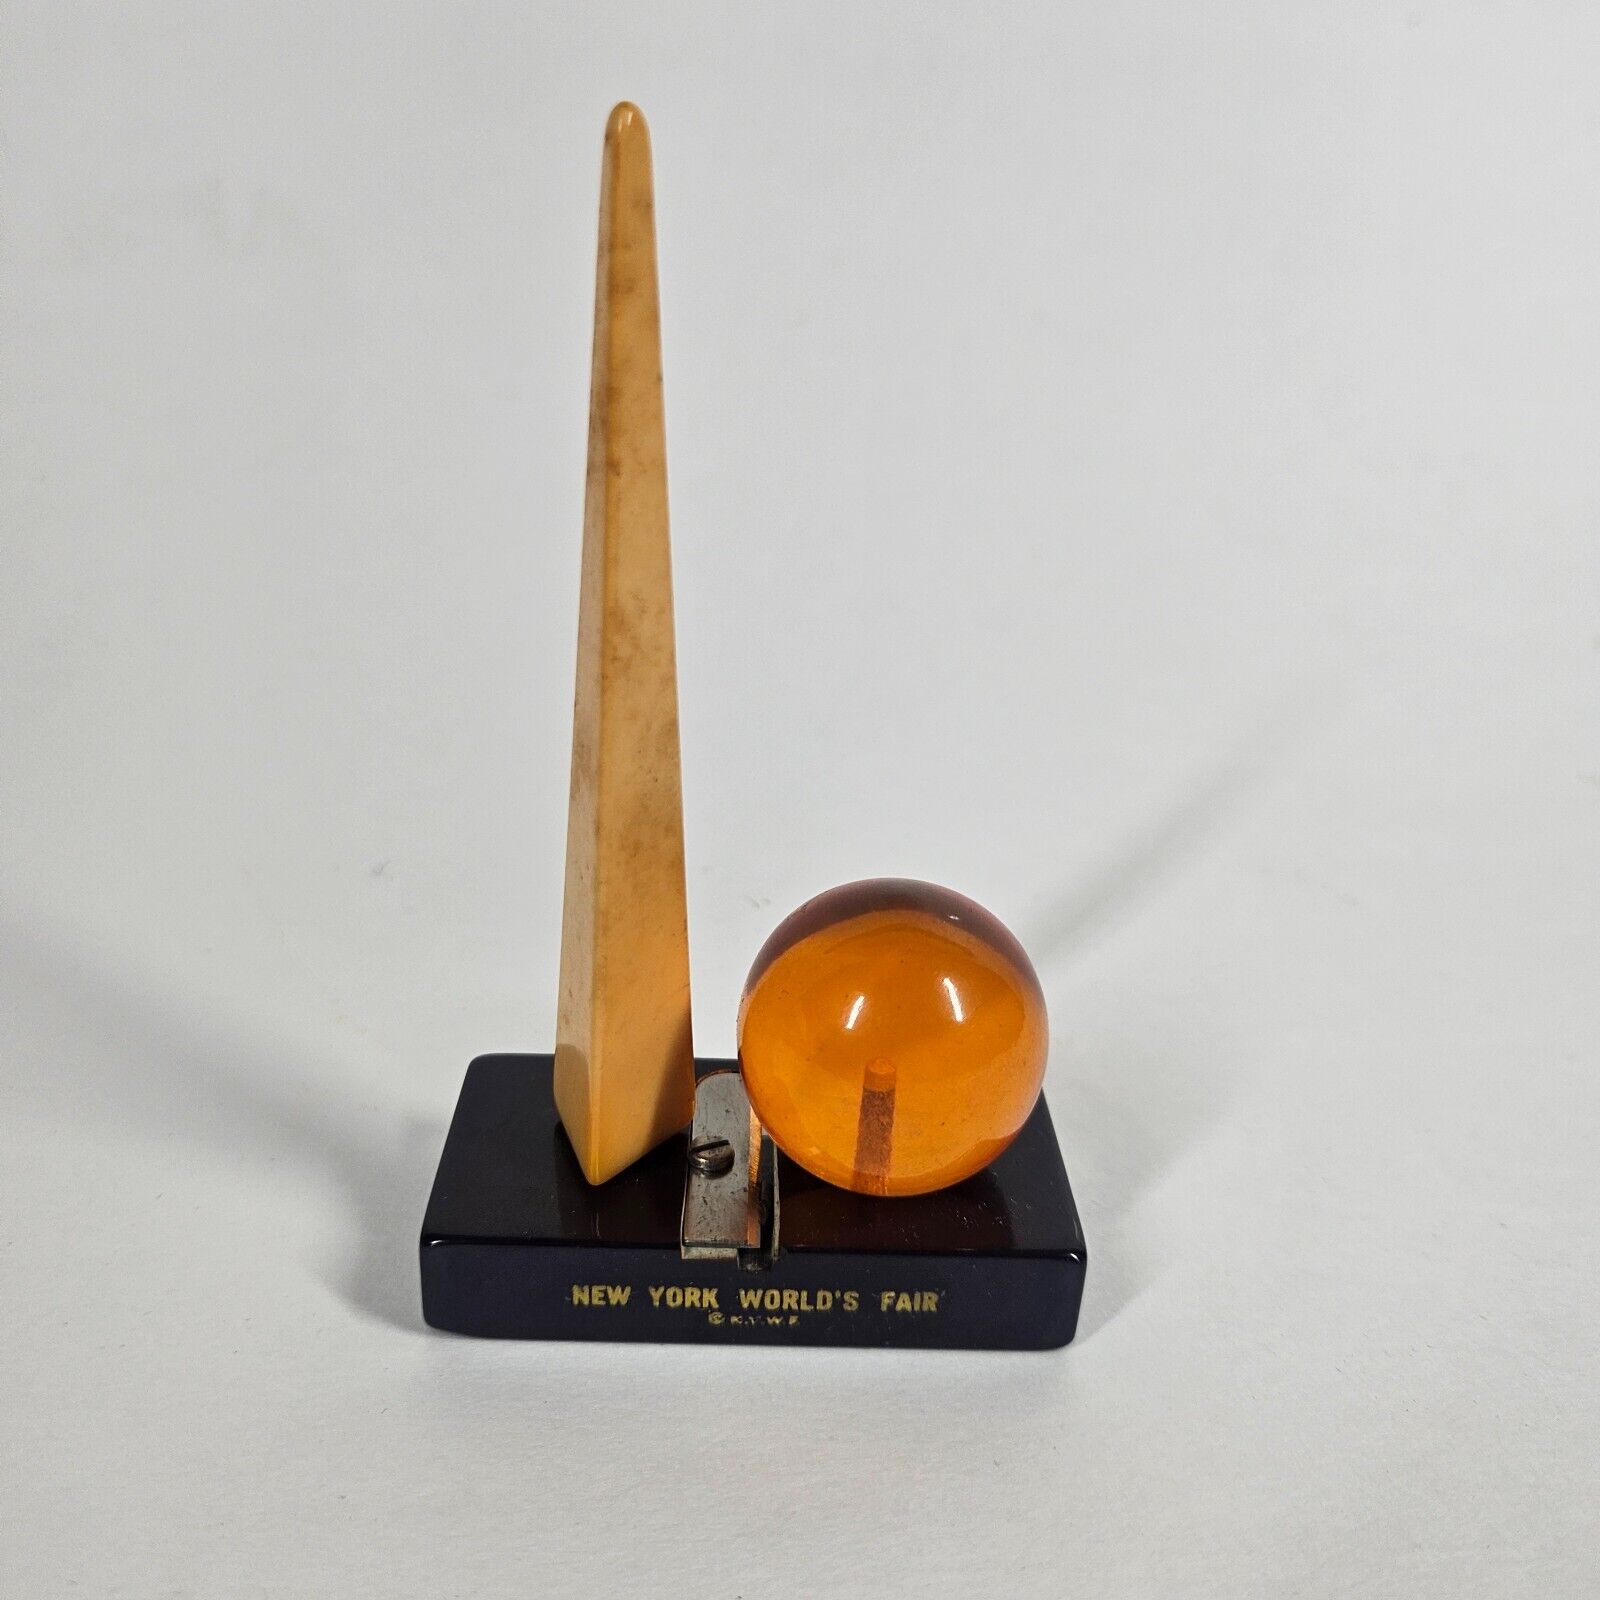 New York World’s Fair 1939 Pencil Sharpener Souvenir Vintage Bakelite Perisphere